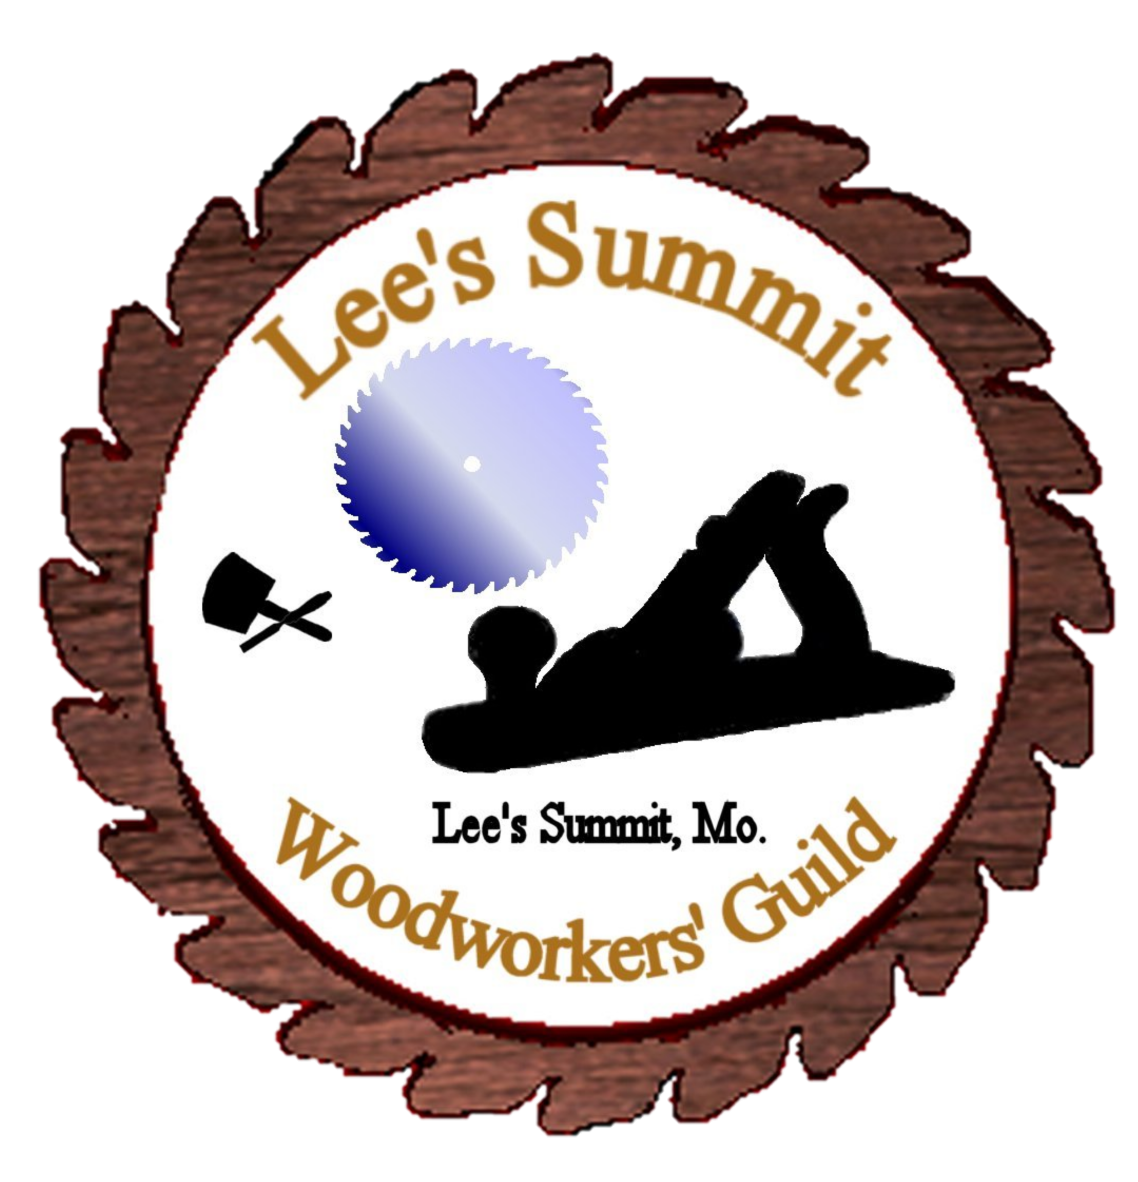 Lee's Summit Woodworker's Guild